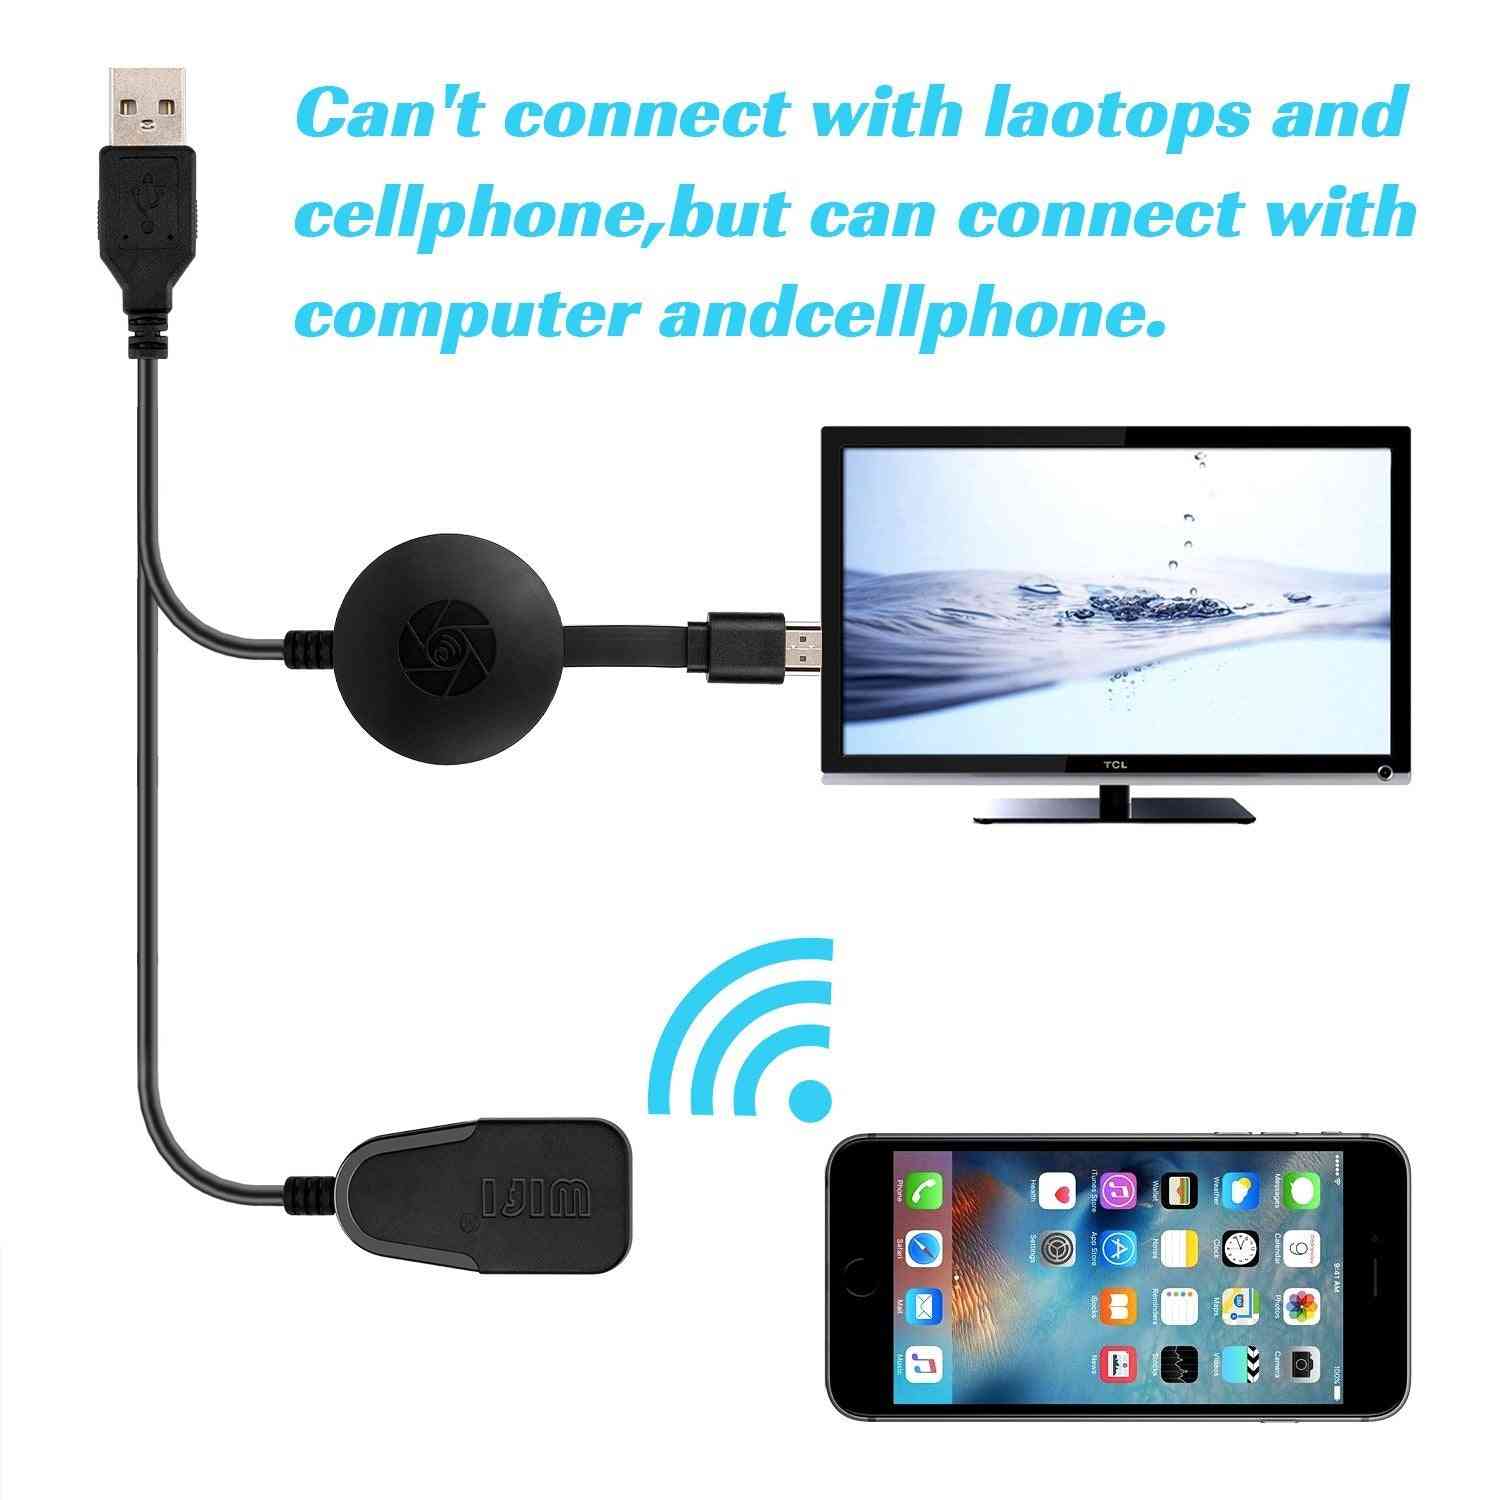 Kabelloser Display-Dongle, tragbarer WLAN-Display-Empfänger 1080p HDMI Miracast-Dongle für iOS iPhone iPad / Mac / Android-Smartphones (schwarz) -